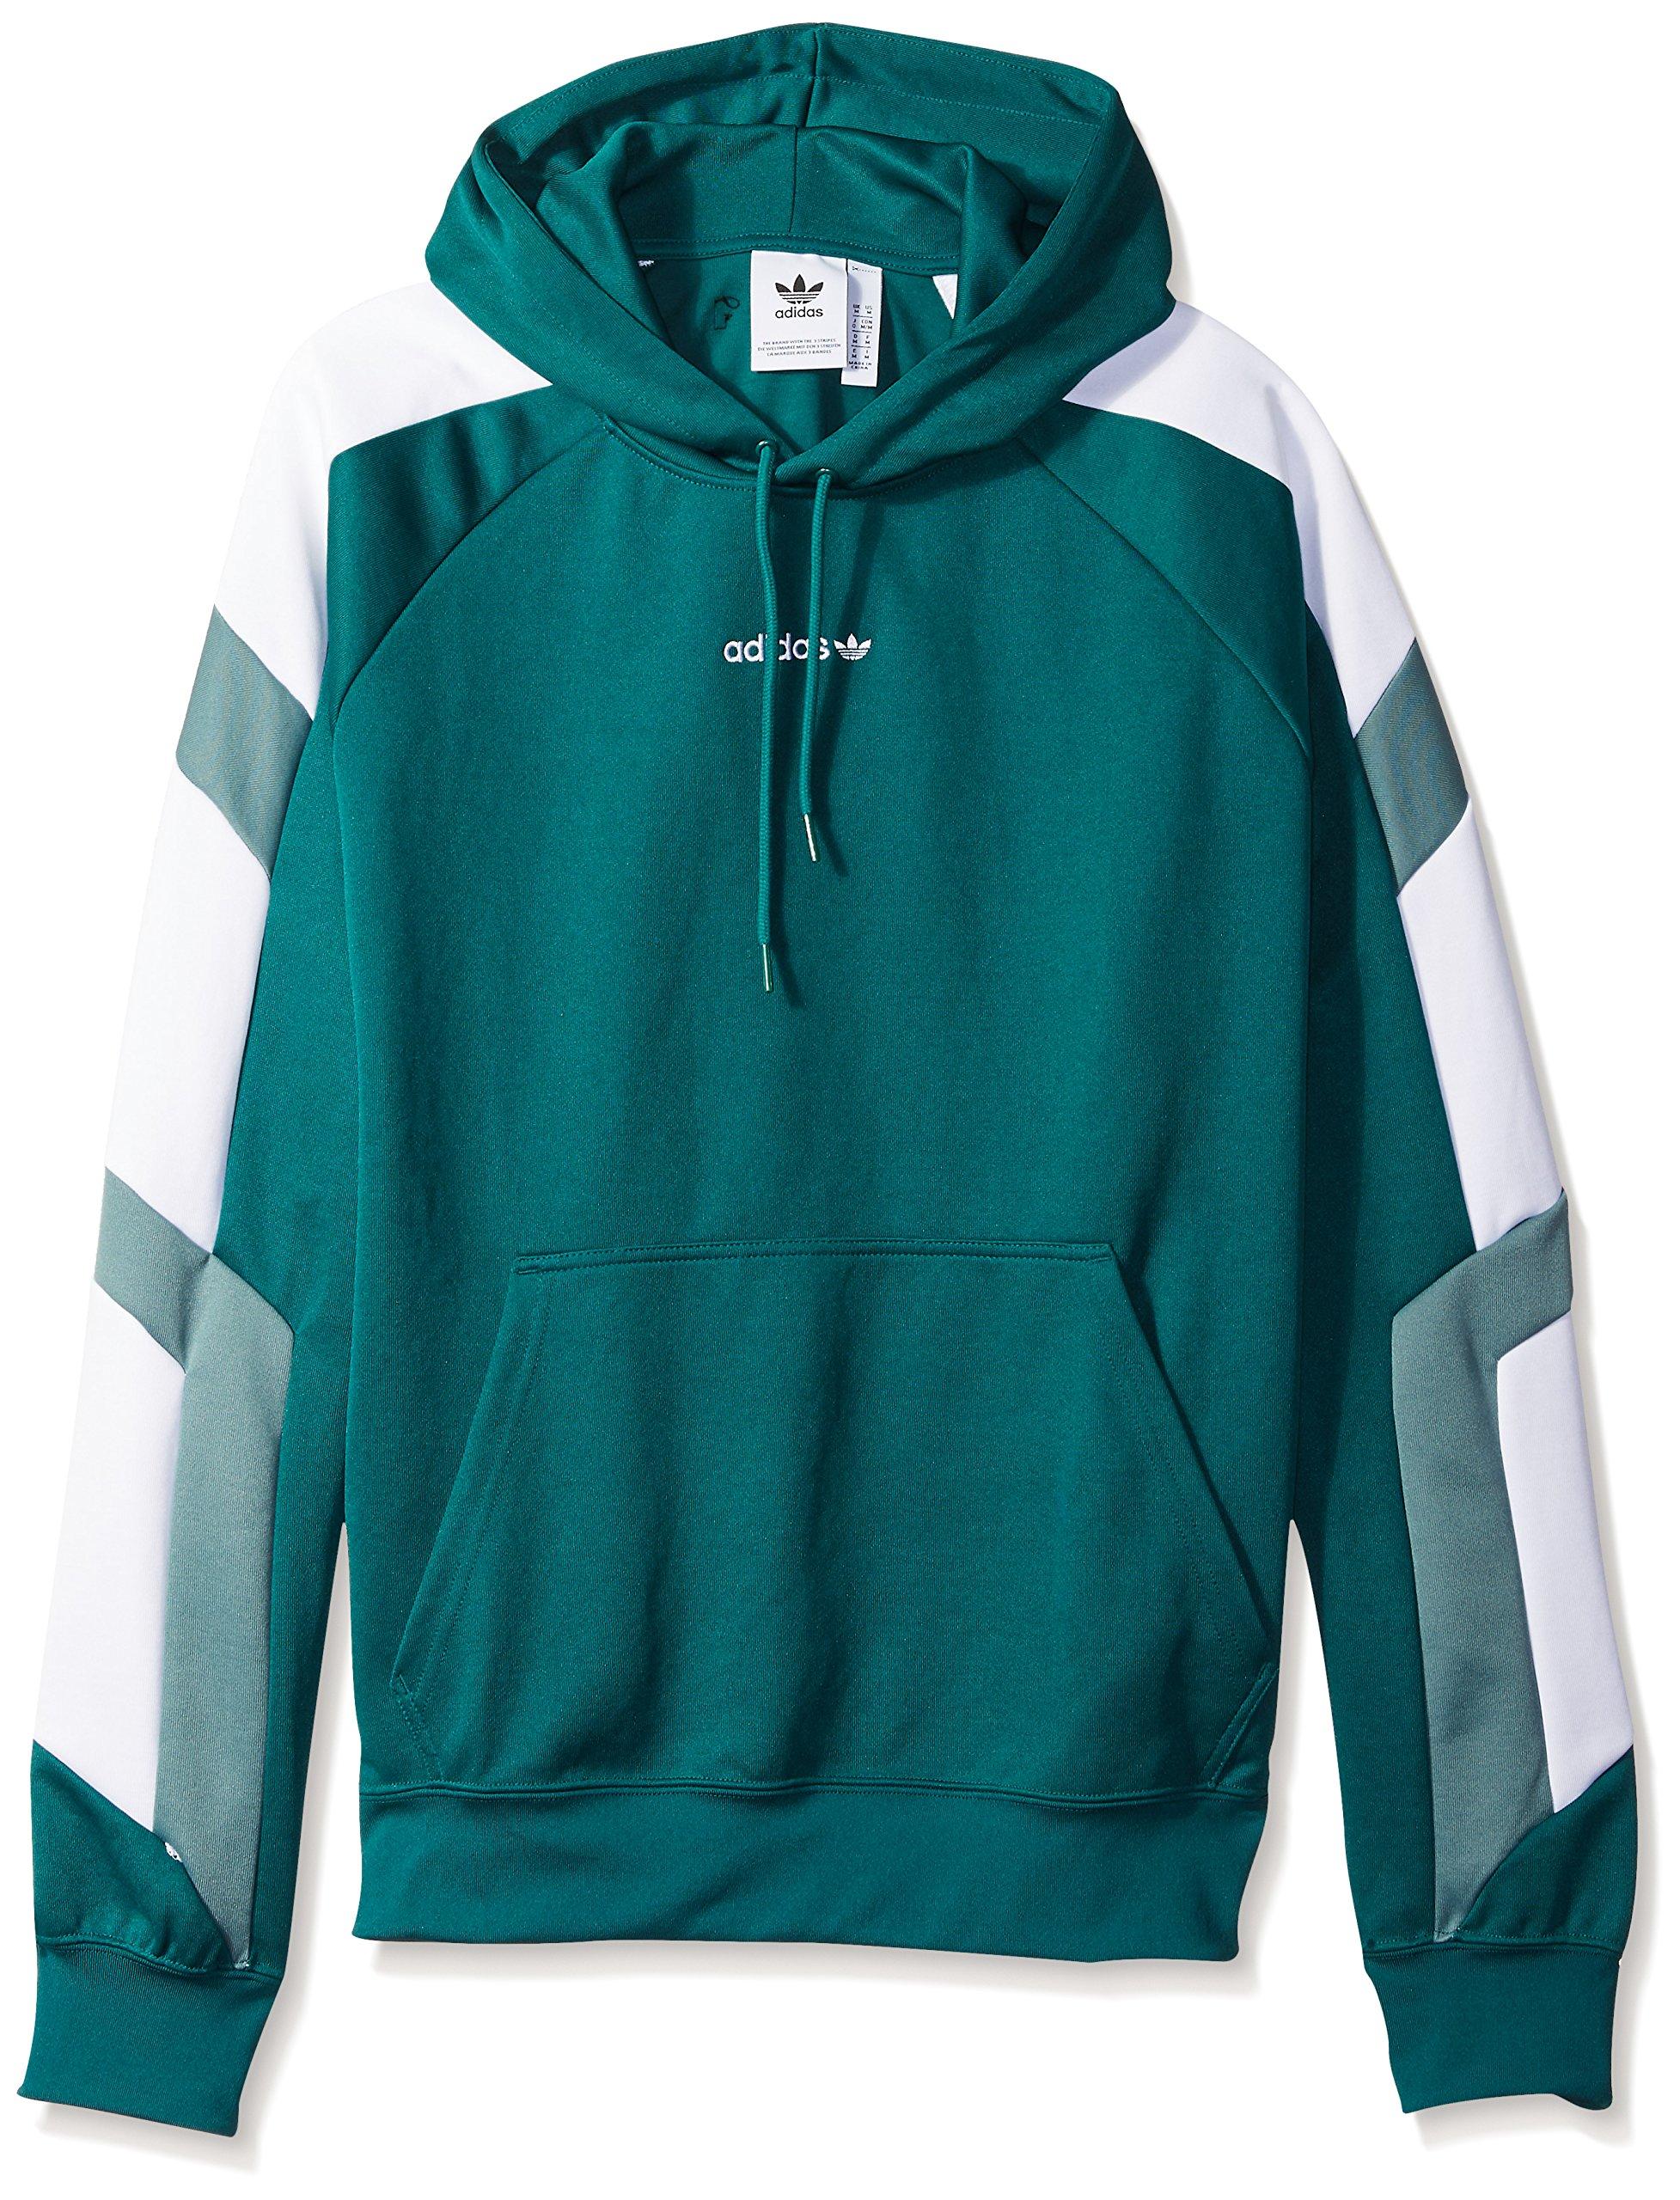 adidas Originals Eqt Color Block Hoodie in Green for Men - Save 23% - Lyst